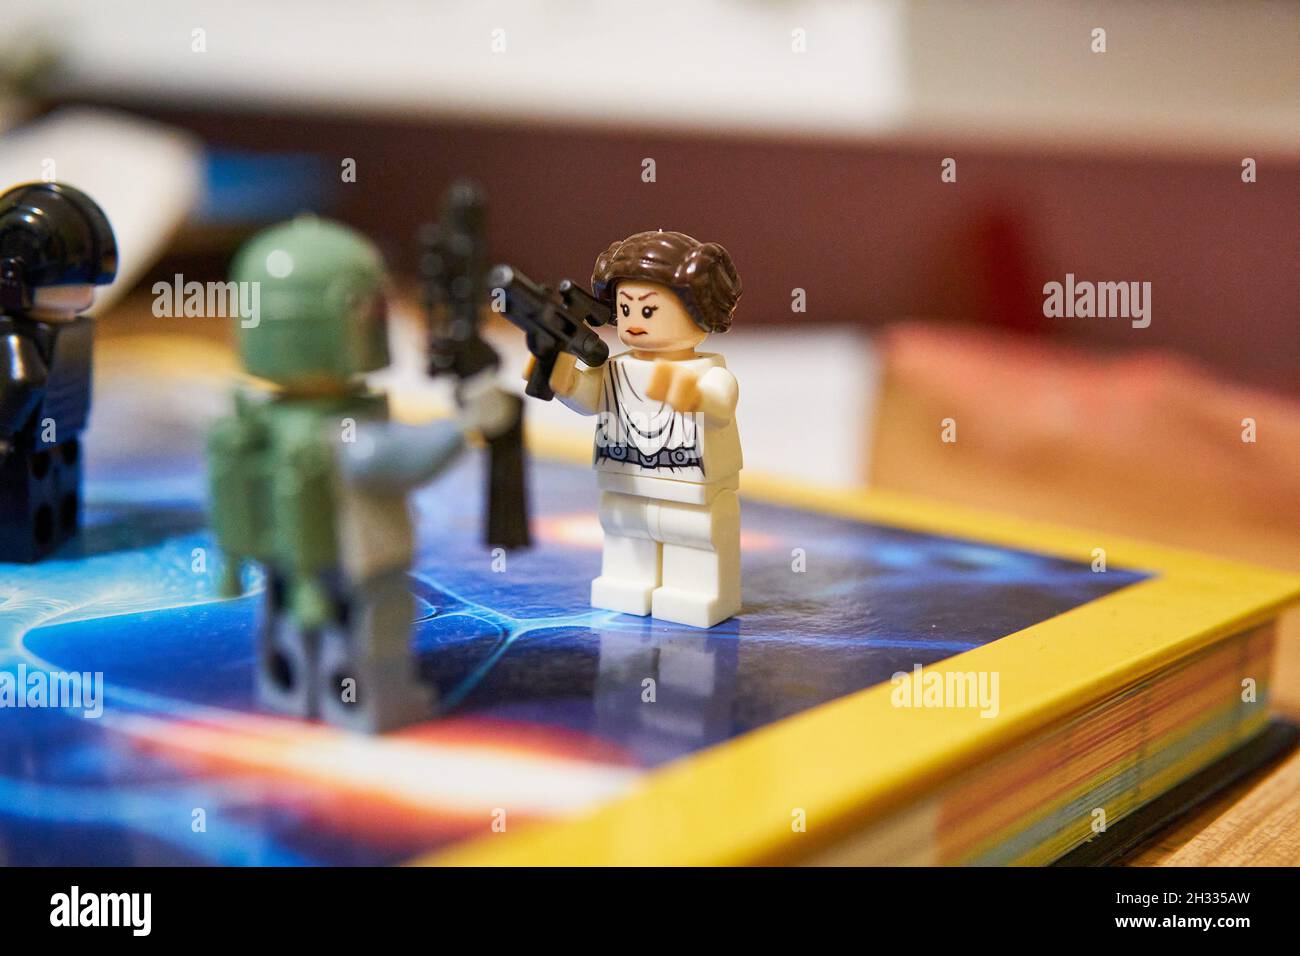 POZNAN, POLAND - Apr 01, 2021: A closeup of Star Wars lego figures combat. Stock Photo